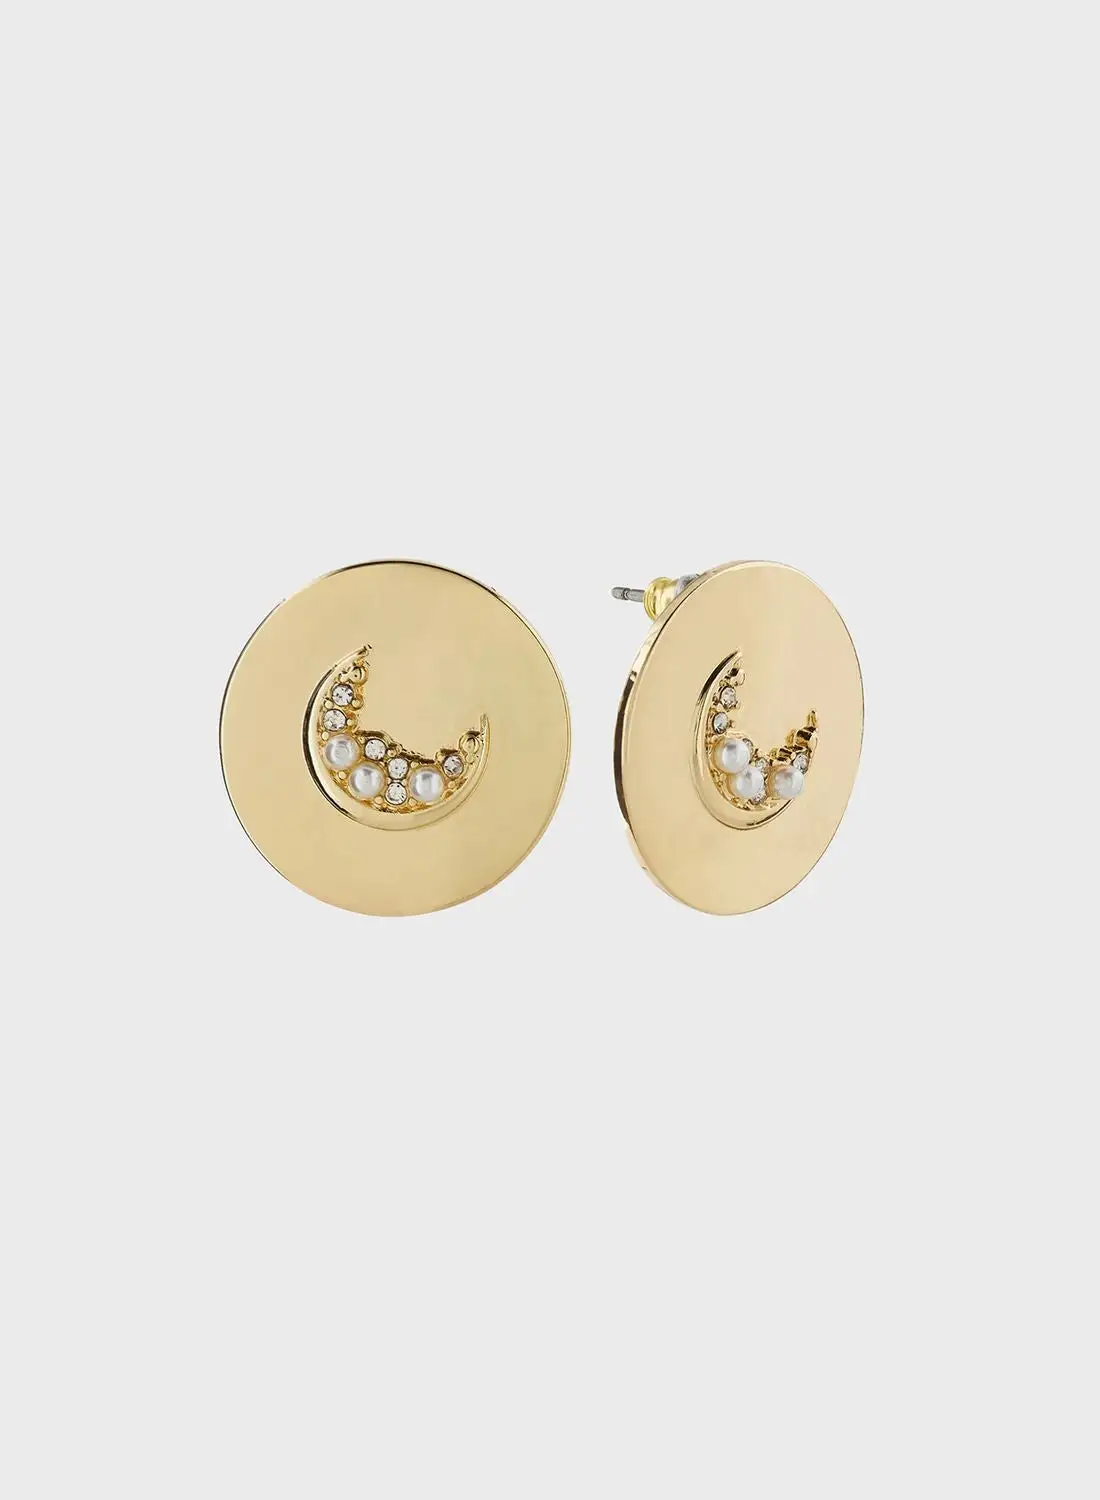 Khizana Crescent Moon Rhinestone Stud Earrings